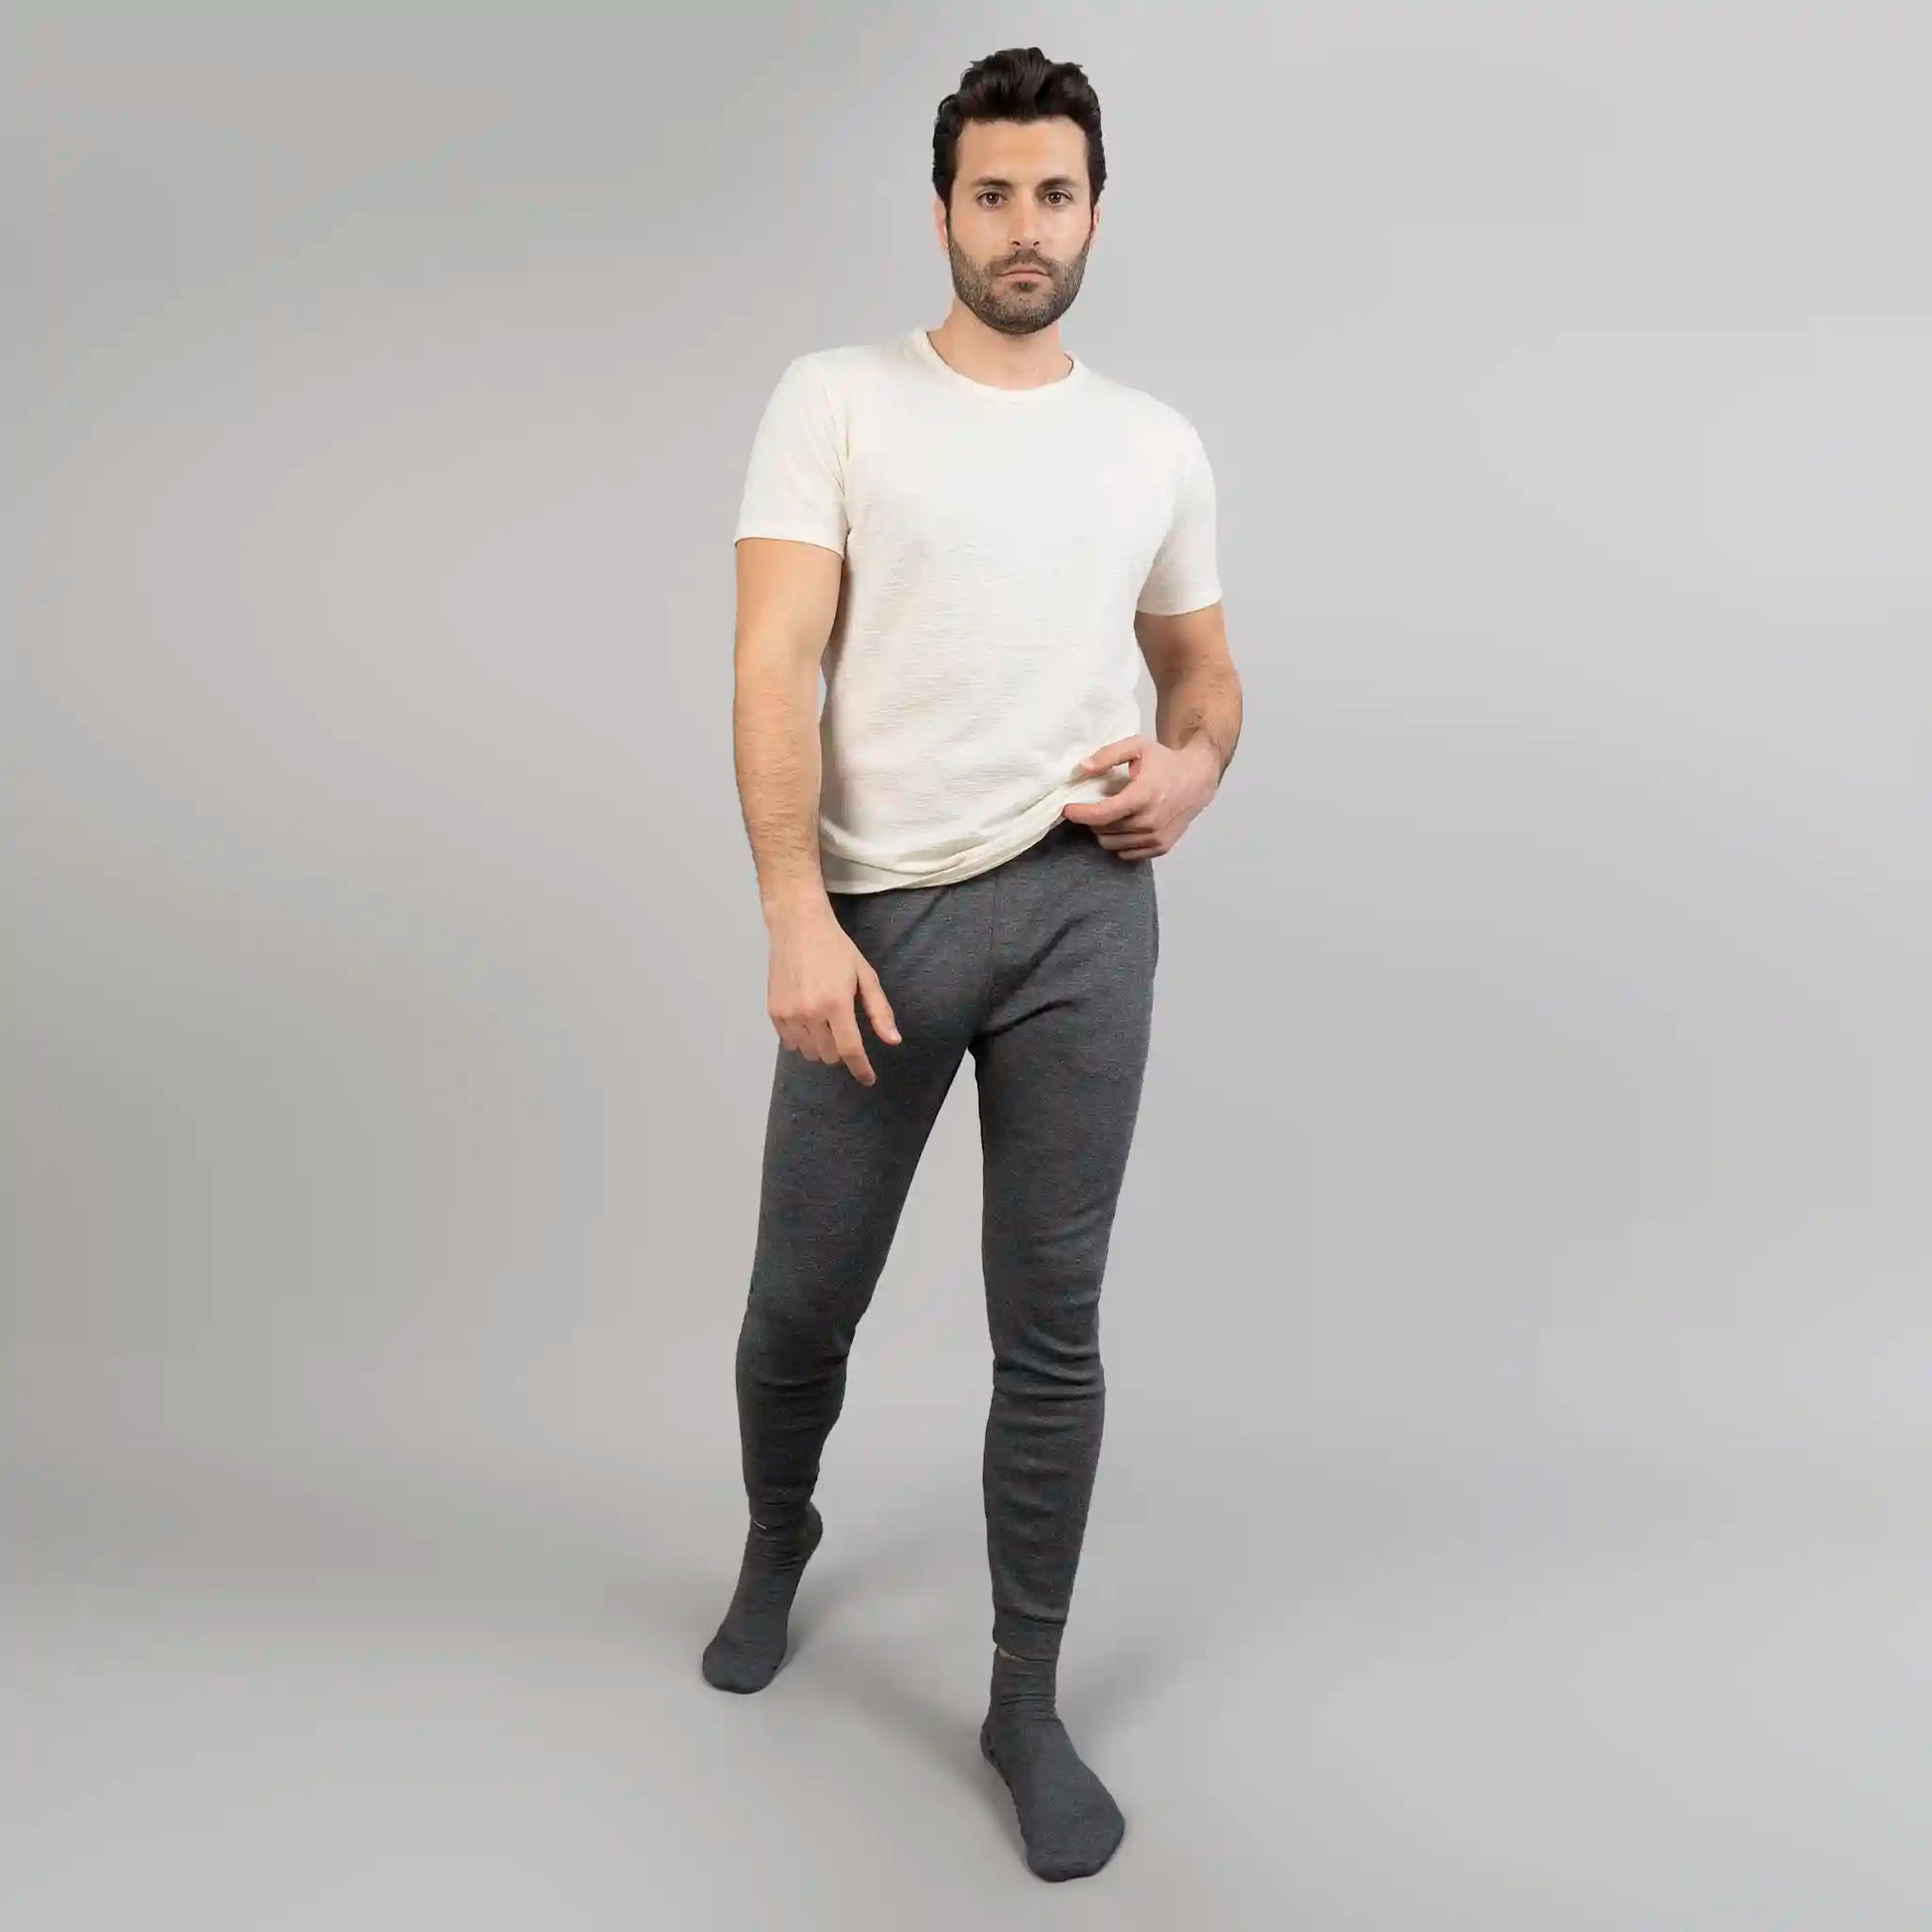 Men's Alpaca Wool Sweatpants 420 Midweight color Gray